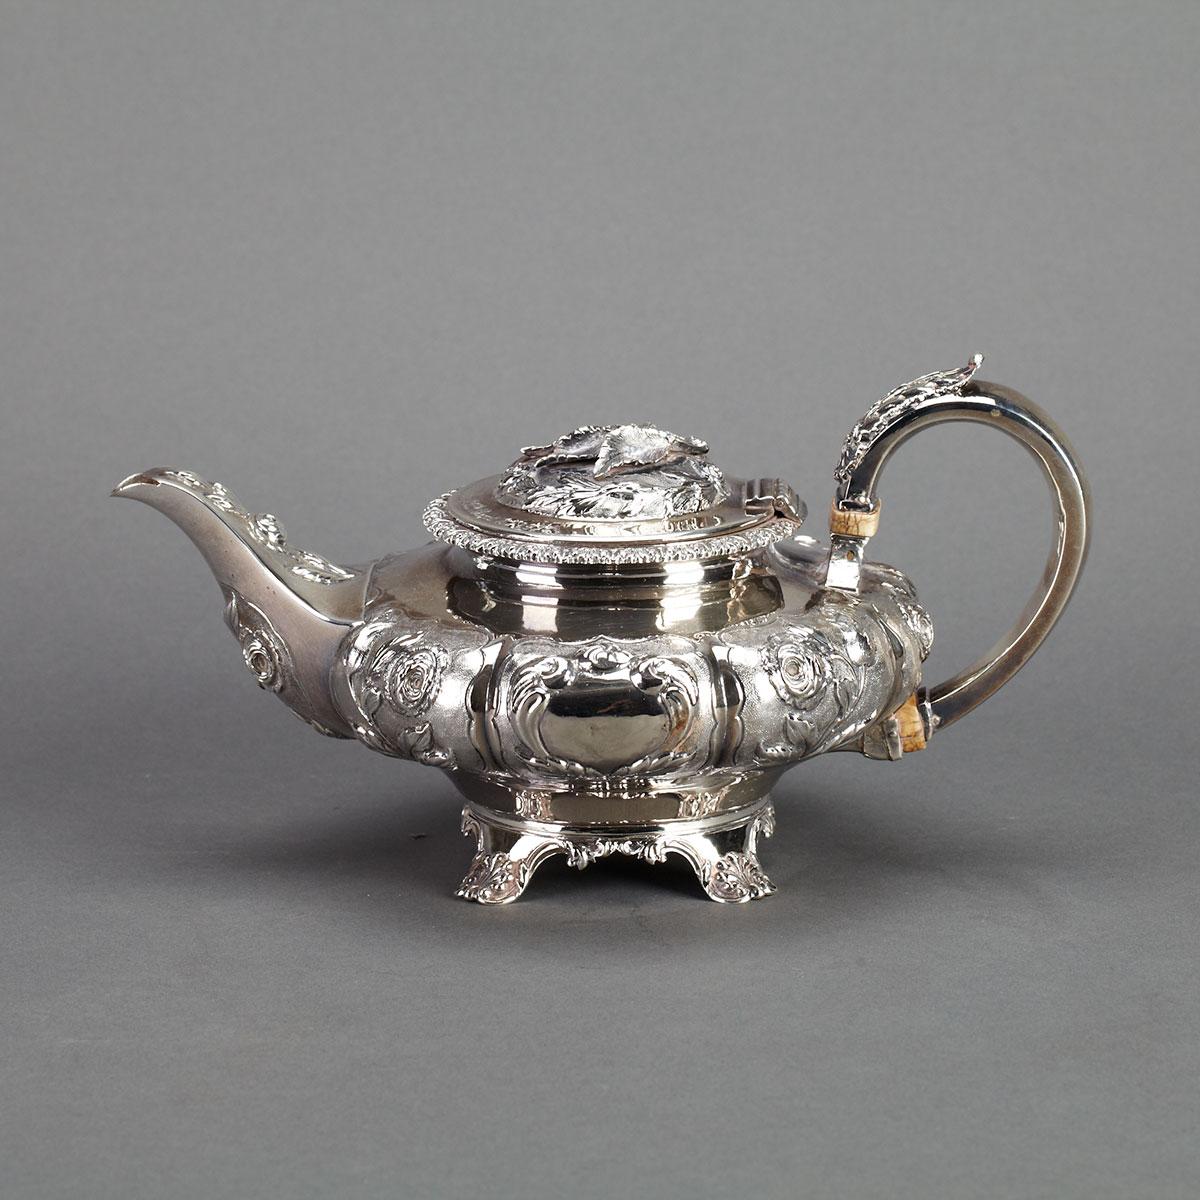 Victorian Silver Teapot, Richard Pierce & George Burrows, London, 1833